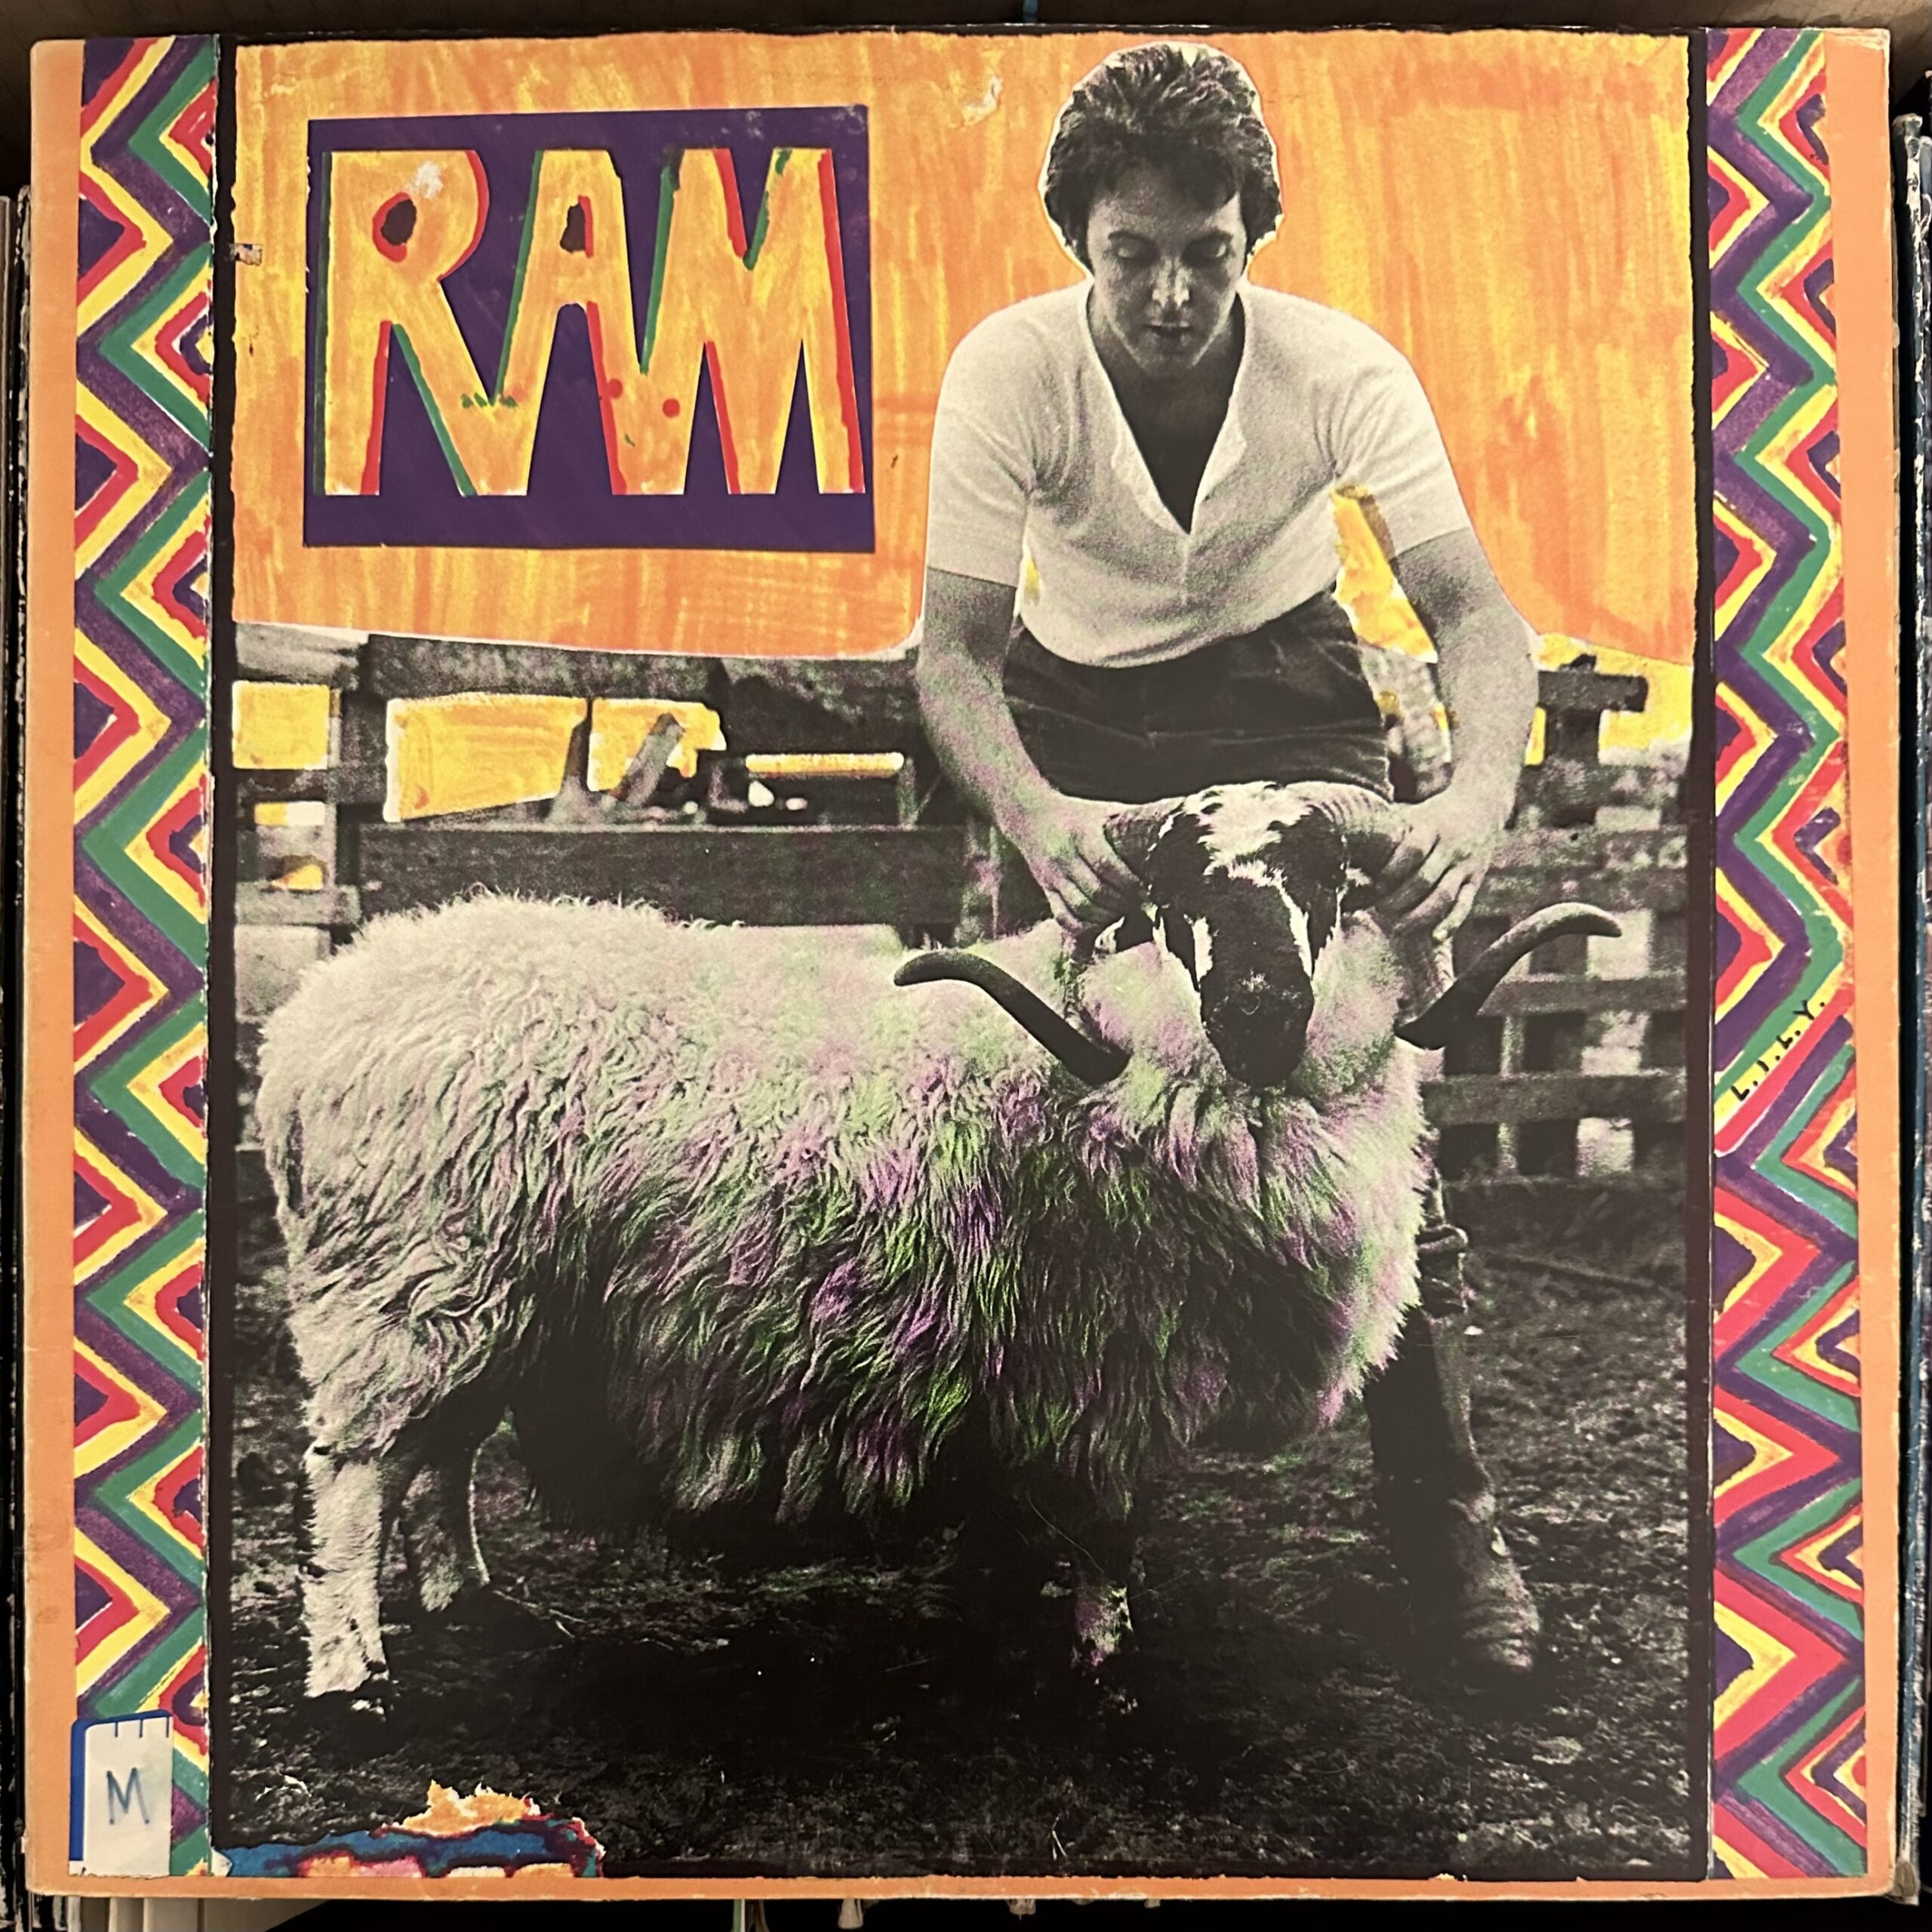 Ram by Paul and Linda McCartney